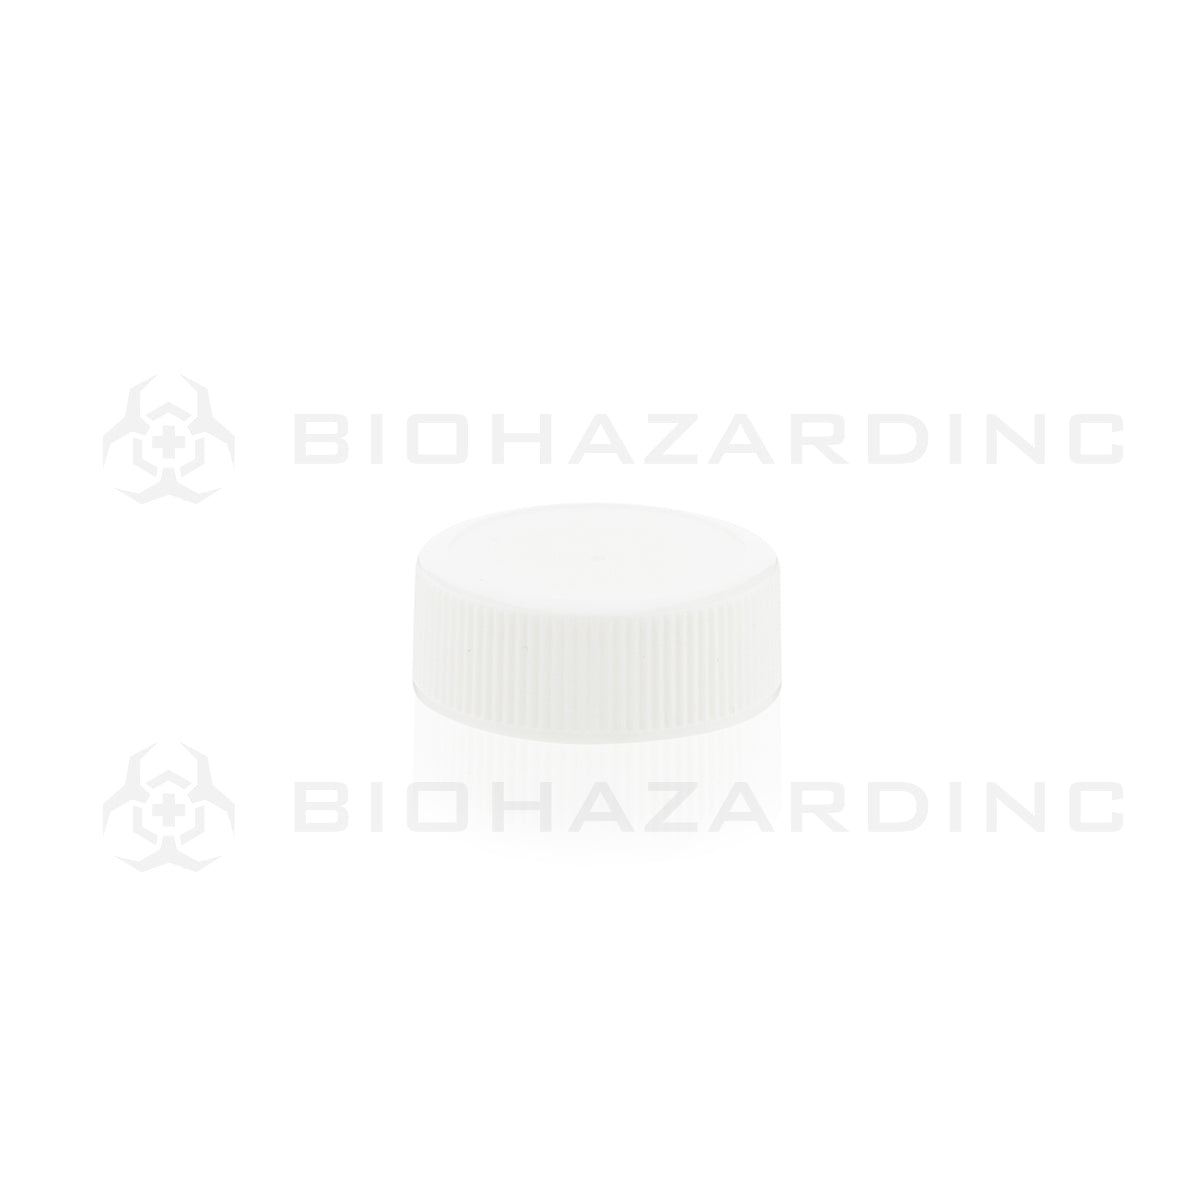 Plastic Cap | Polypropylene Plastic Caps | 28mm - White - 126 Count Cap Biohazard Inc   